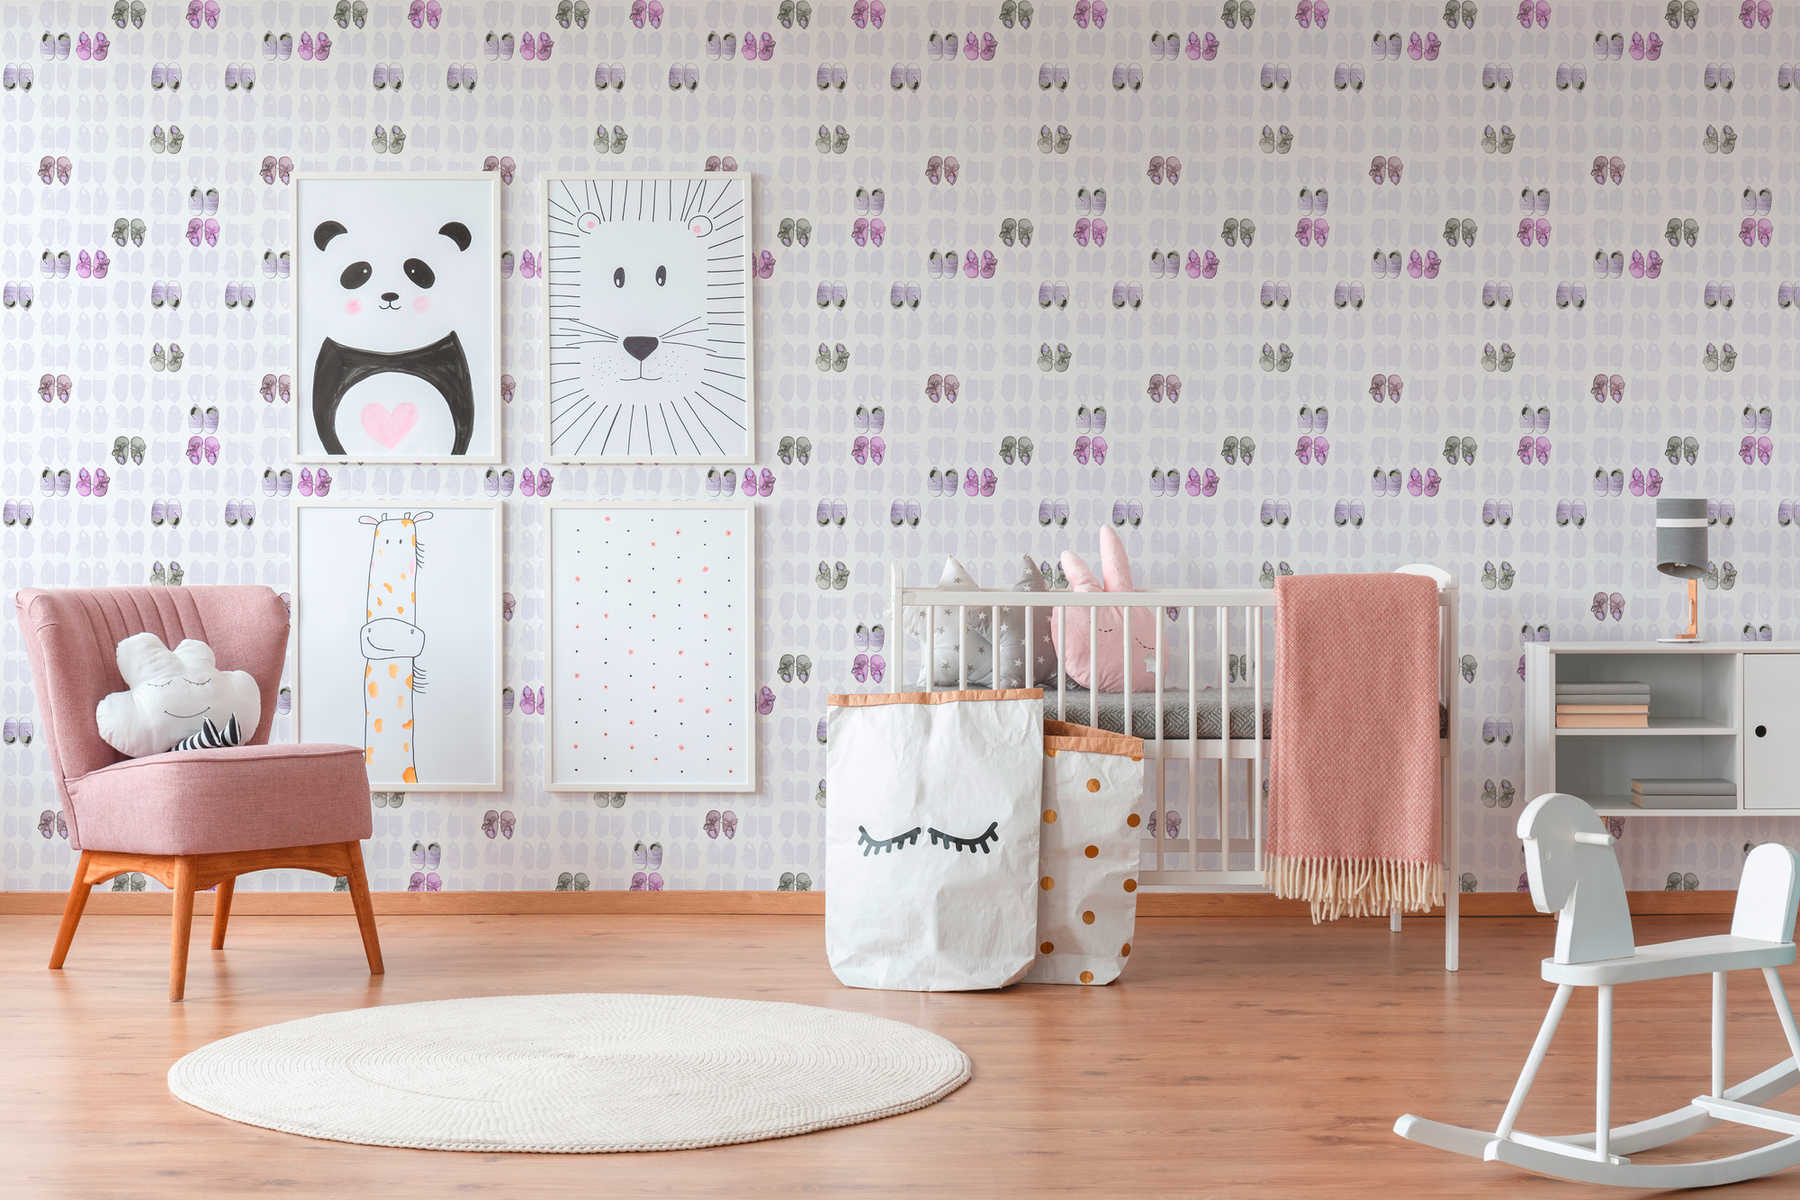             Papel pintado de habitación de bebé zapatos de bebé para niñas - rosa, blanco
        